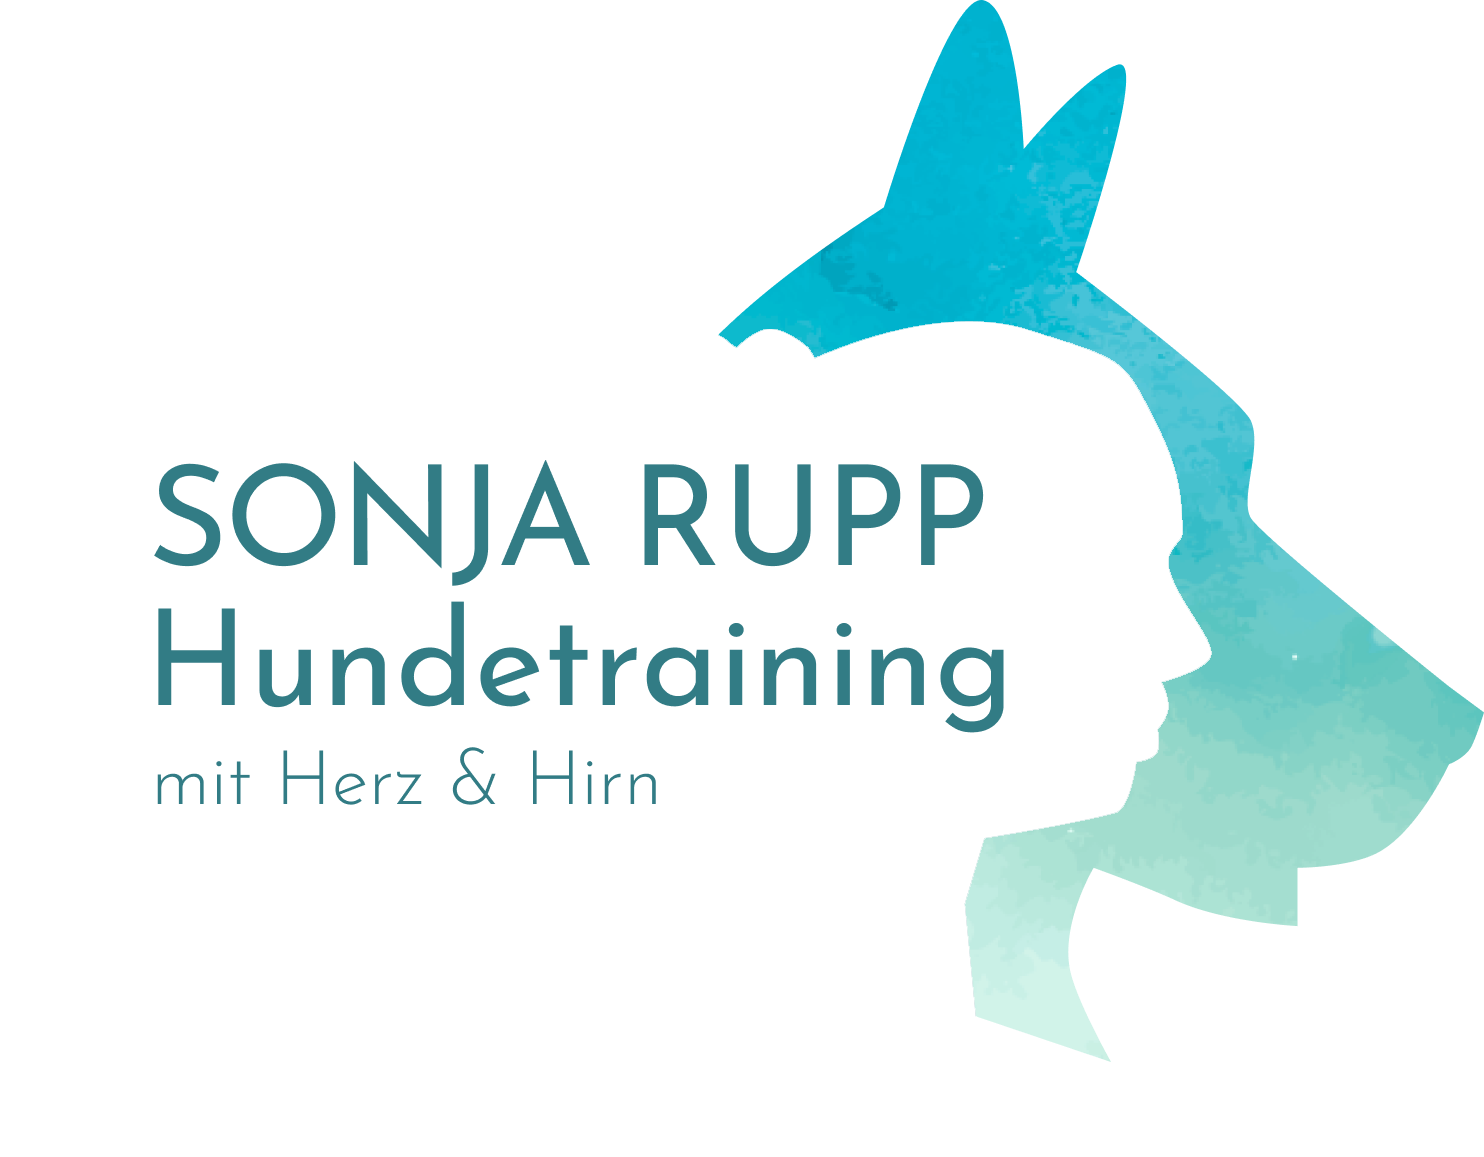 Sonja Rupp Hundetraining mit Herz & Hirn